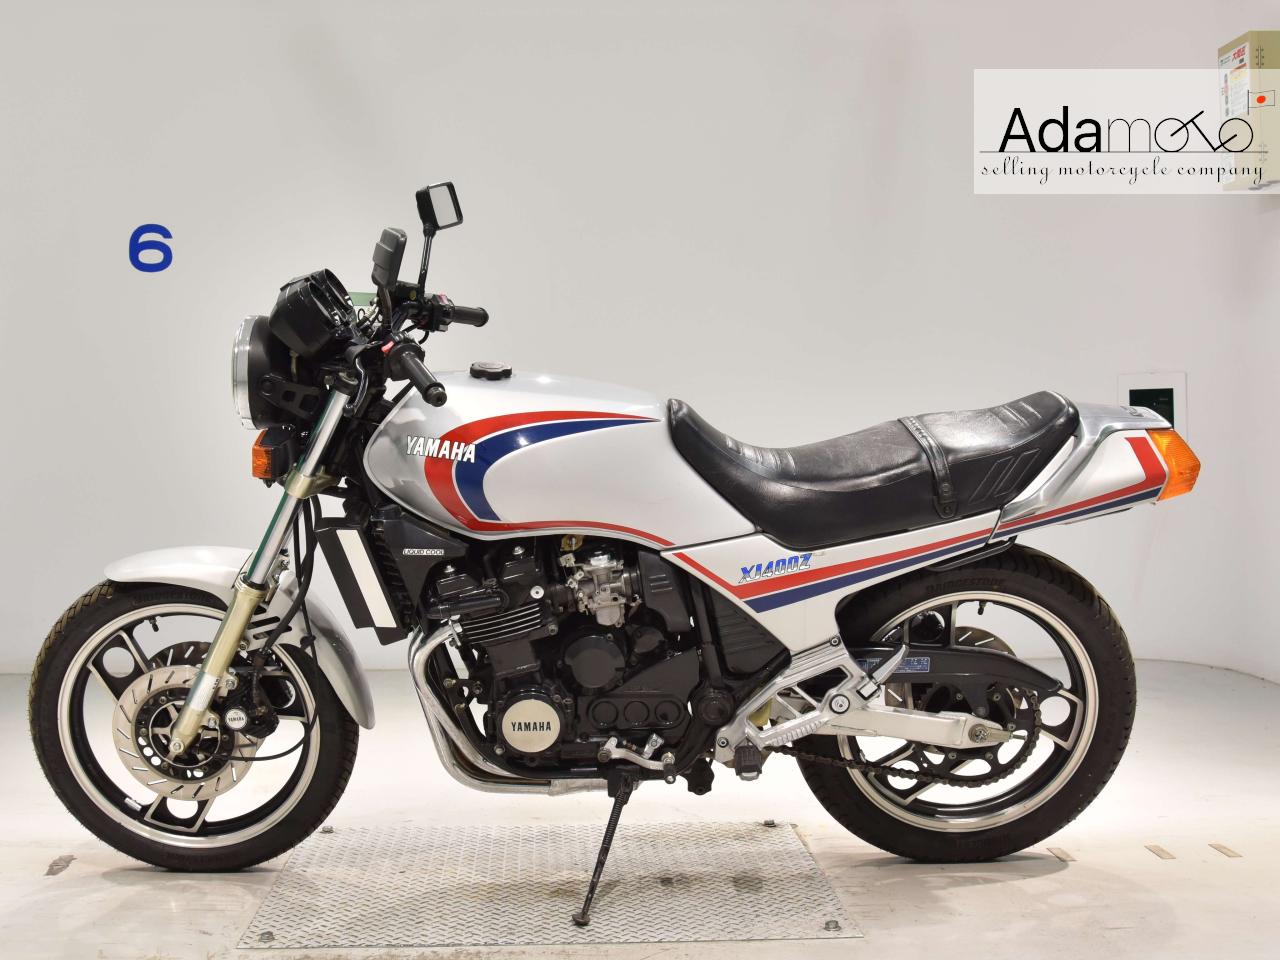 Yamaha XJ400Z - Adamoto - Motorcycles from Japan